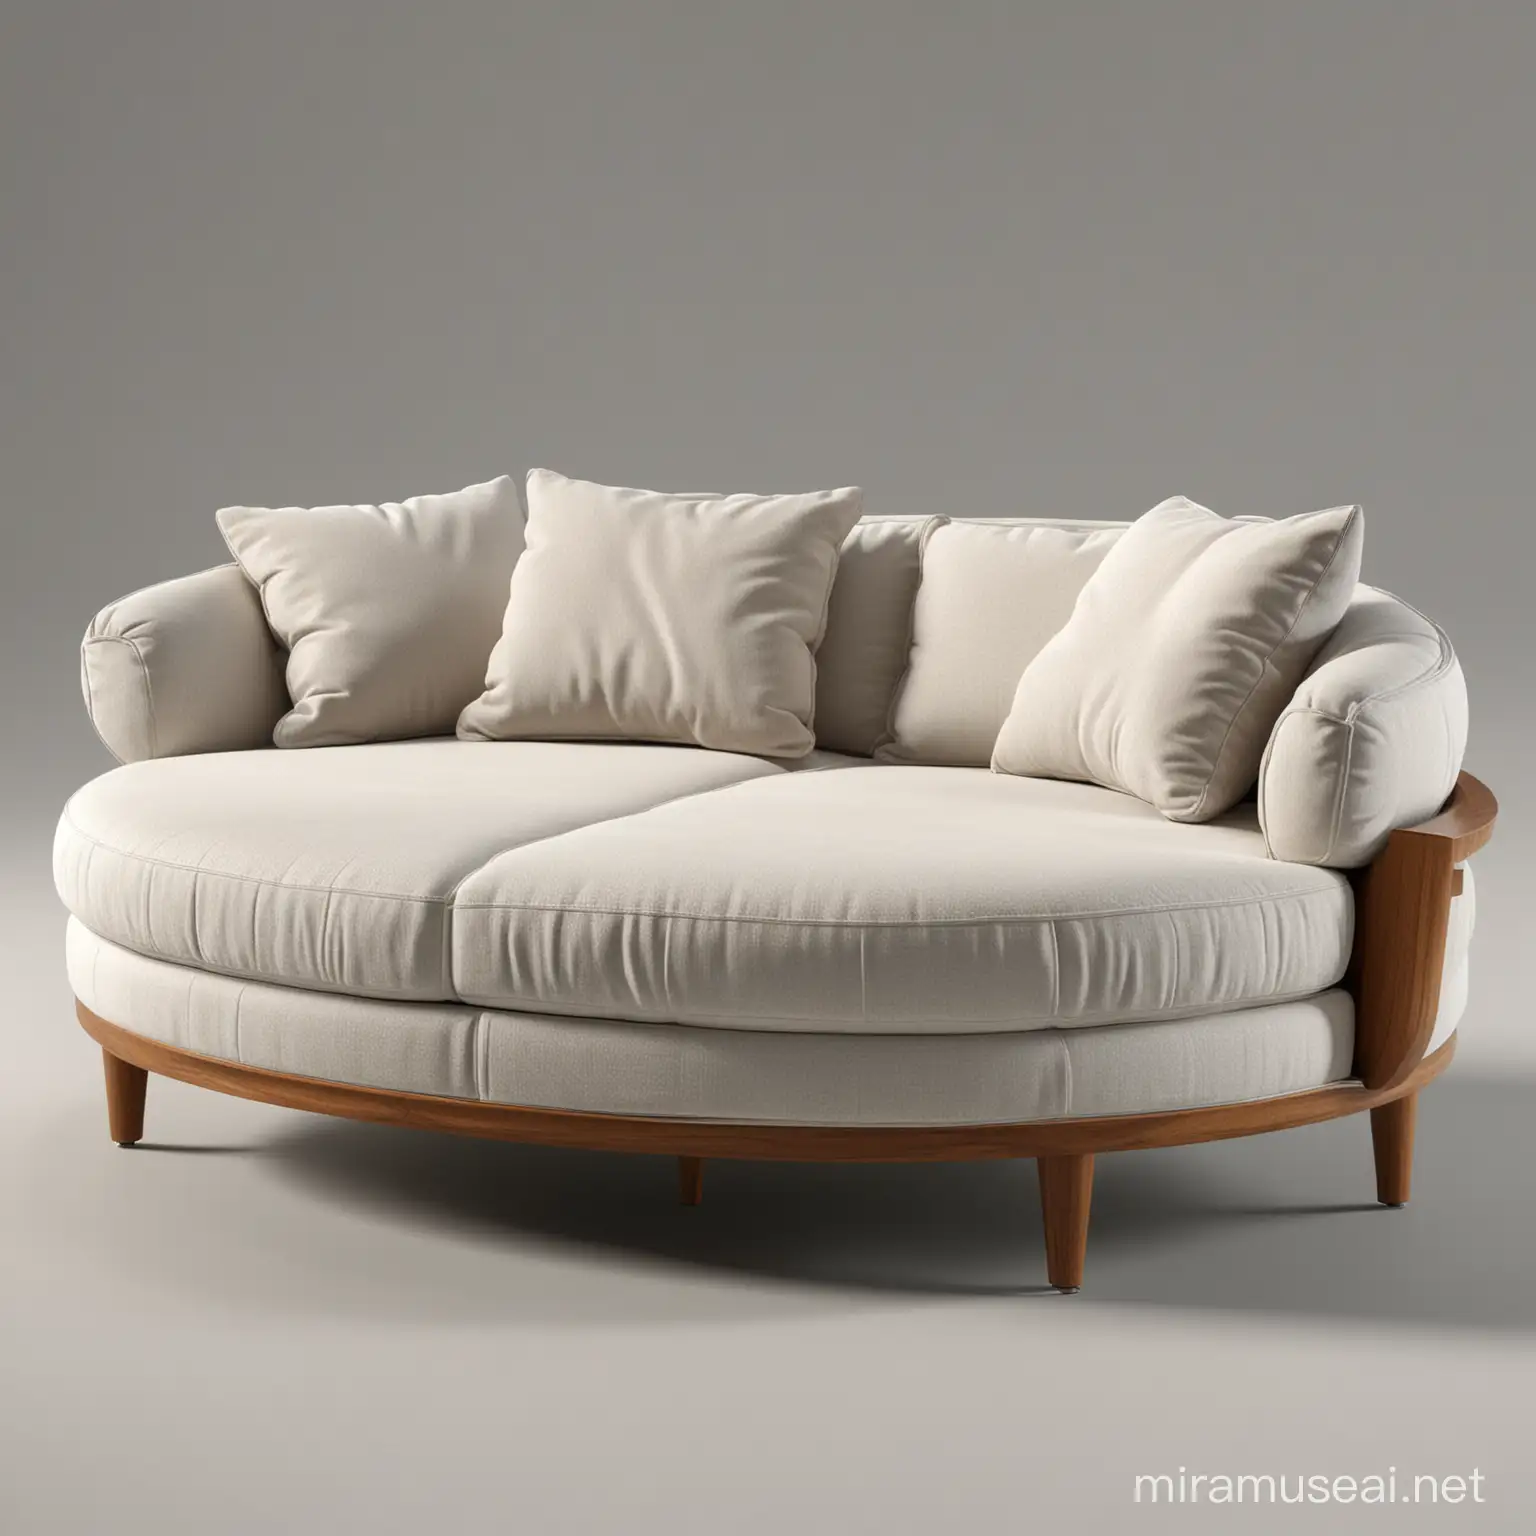 Italian design,European sofa,12 cm wooden leg,round cushion,mechanical back and arm,round arm and back,3D design,c.